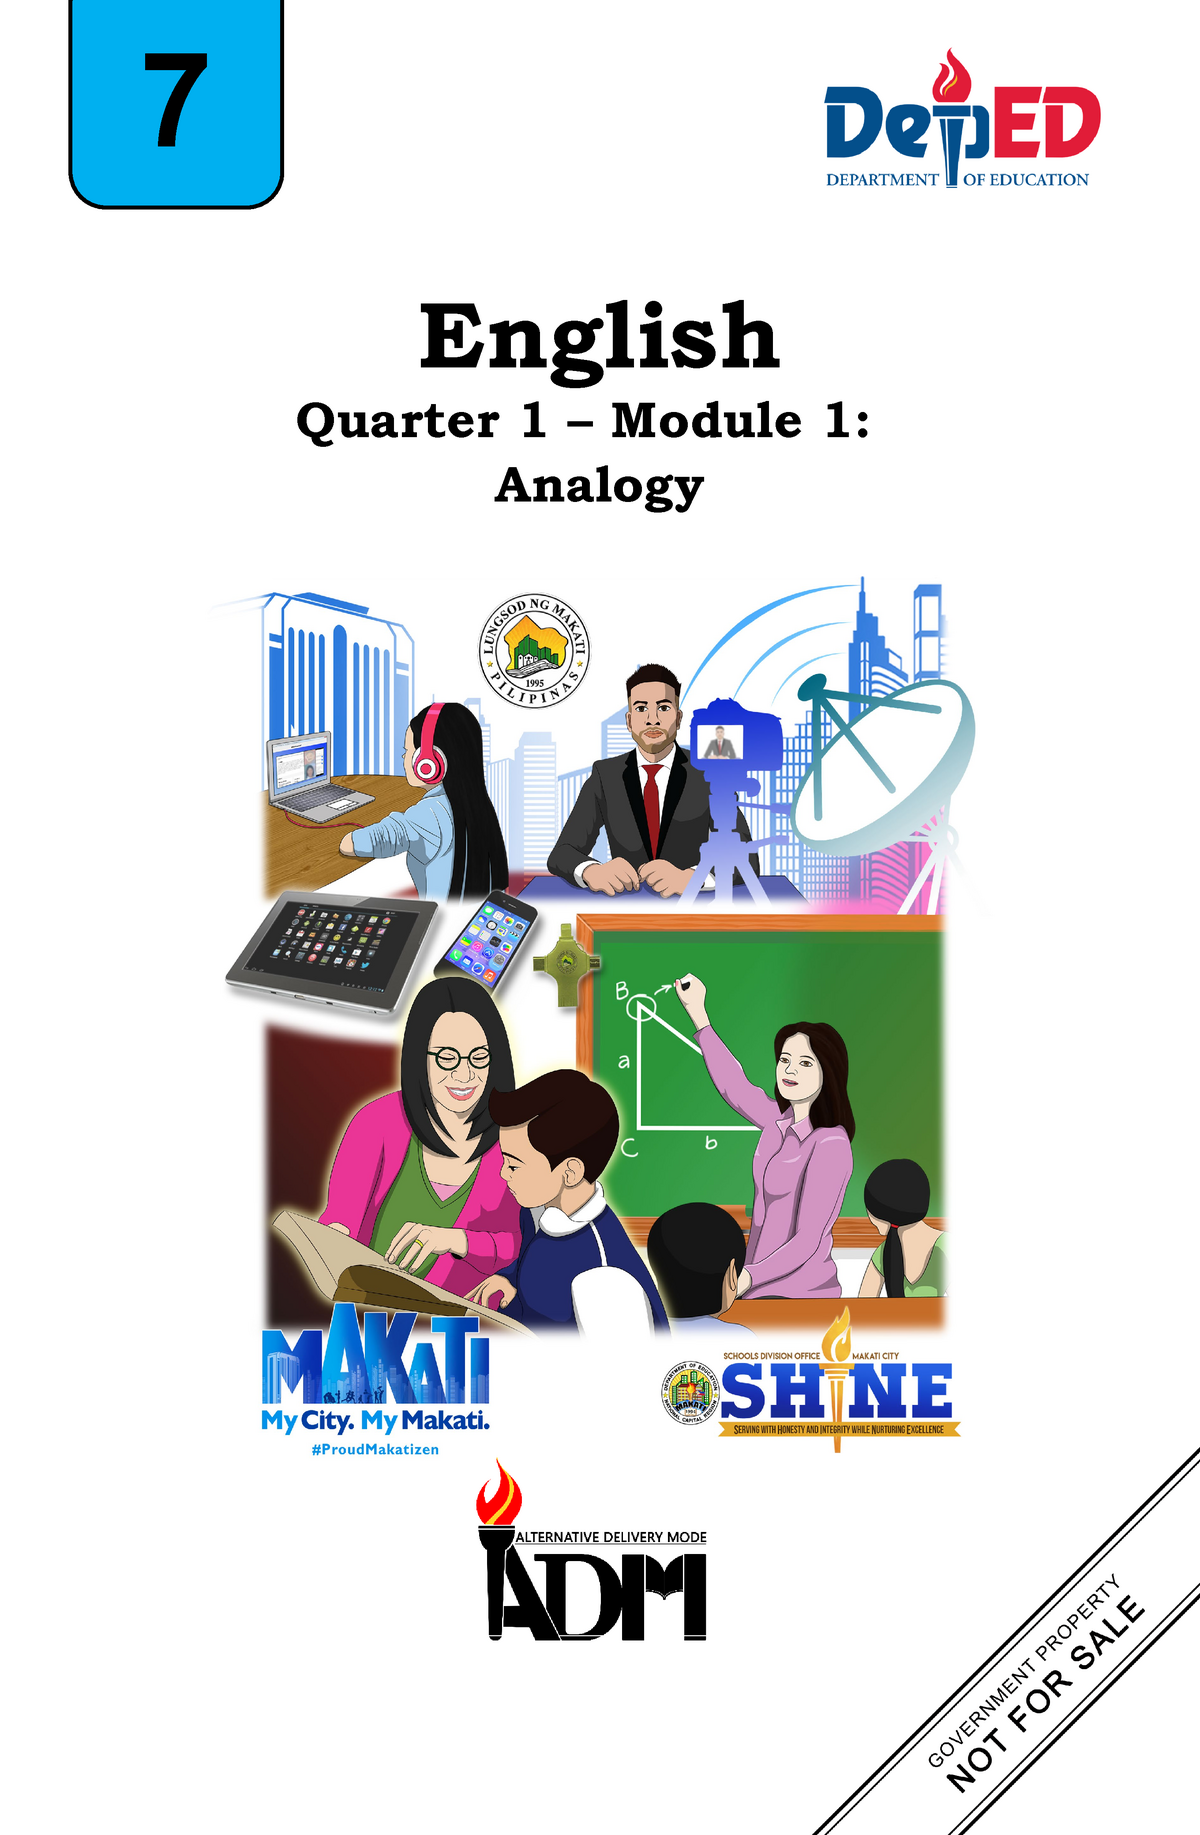 Eng7 Q1 Mod1 Analogy V1 Forprinting English Quarter 1 Module 1 Analogy 7 English Grade 7 8113